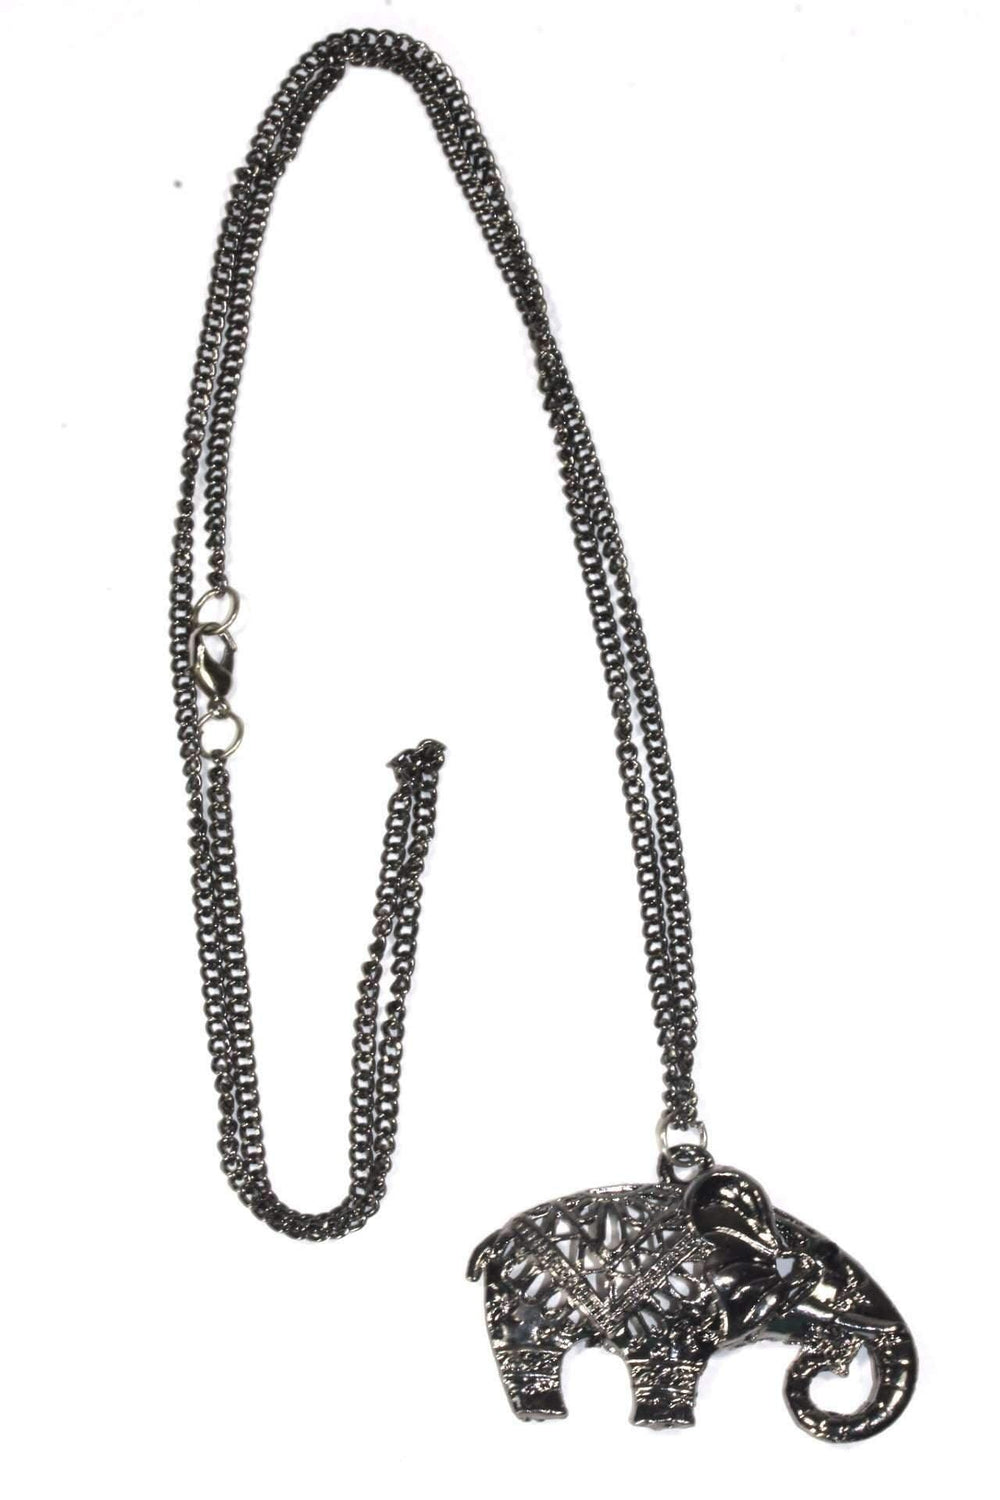 Festival Elephant Pendant Necklace - Brand My Case